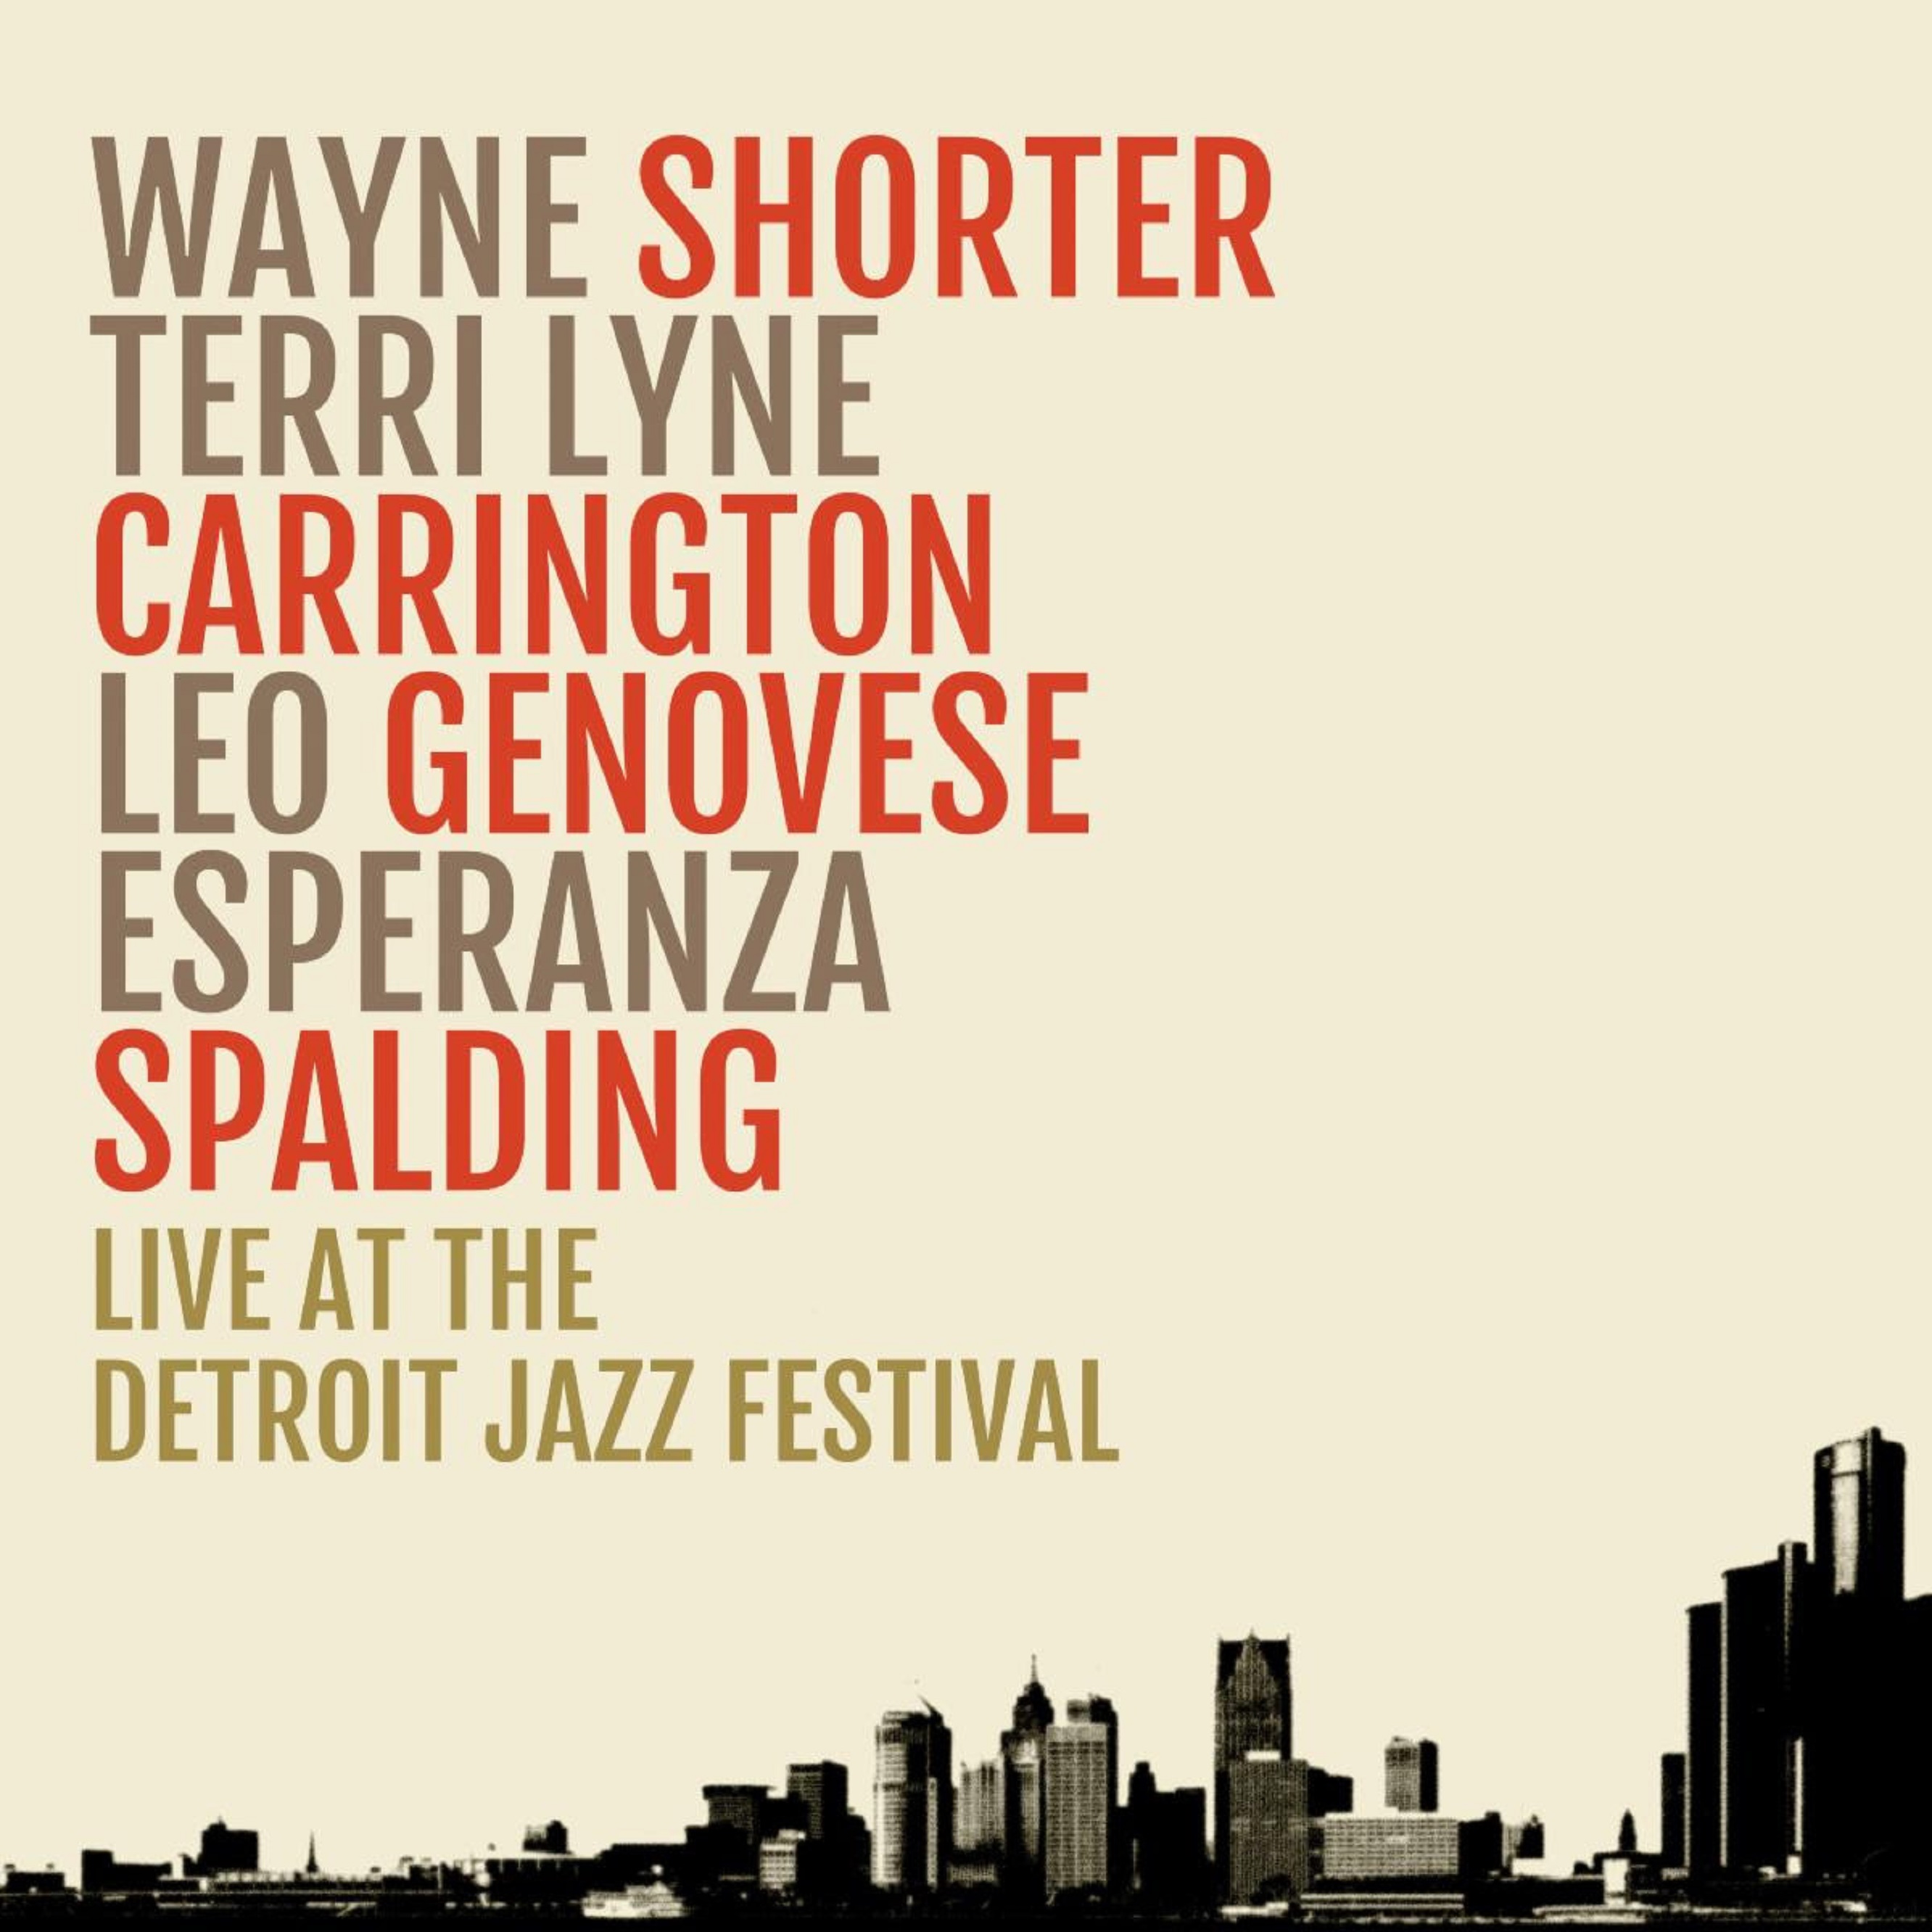 Wayne Shorter, Terri Lyne Carrington, Leo Genovese, and esperanza spalding's 'Live At The Detroit Jazz Festival'